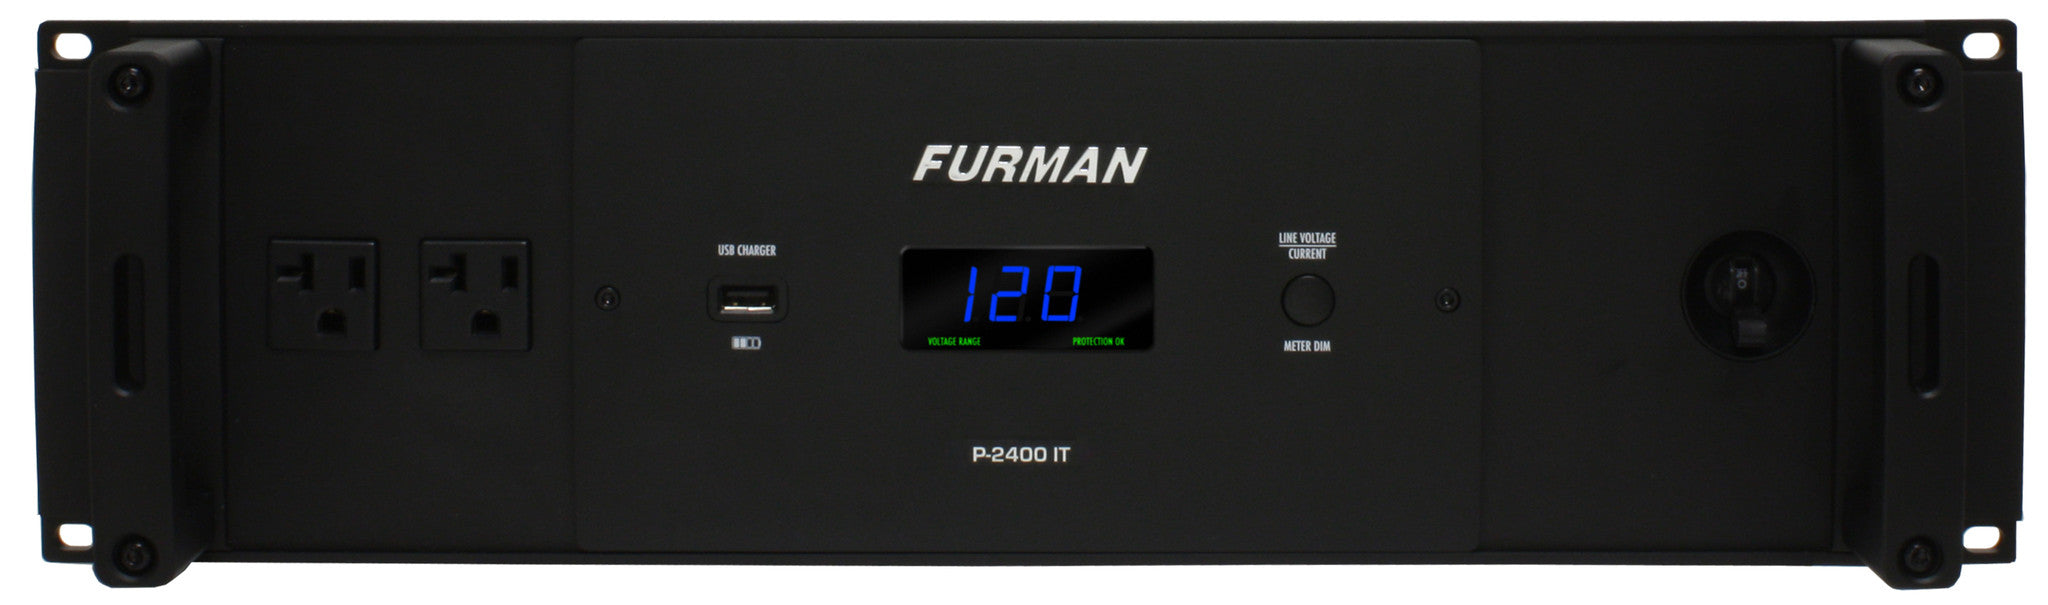 Accessories - Furman - Furman Sound P-2400 IT - Professional Audio Design, Inc